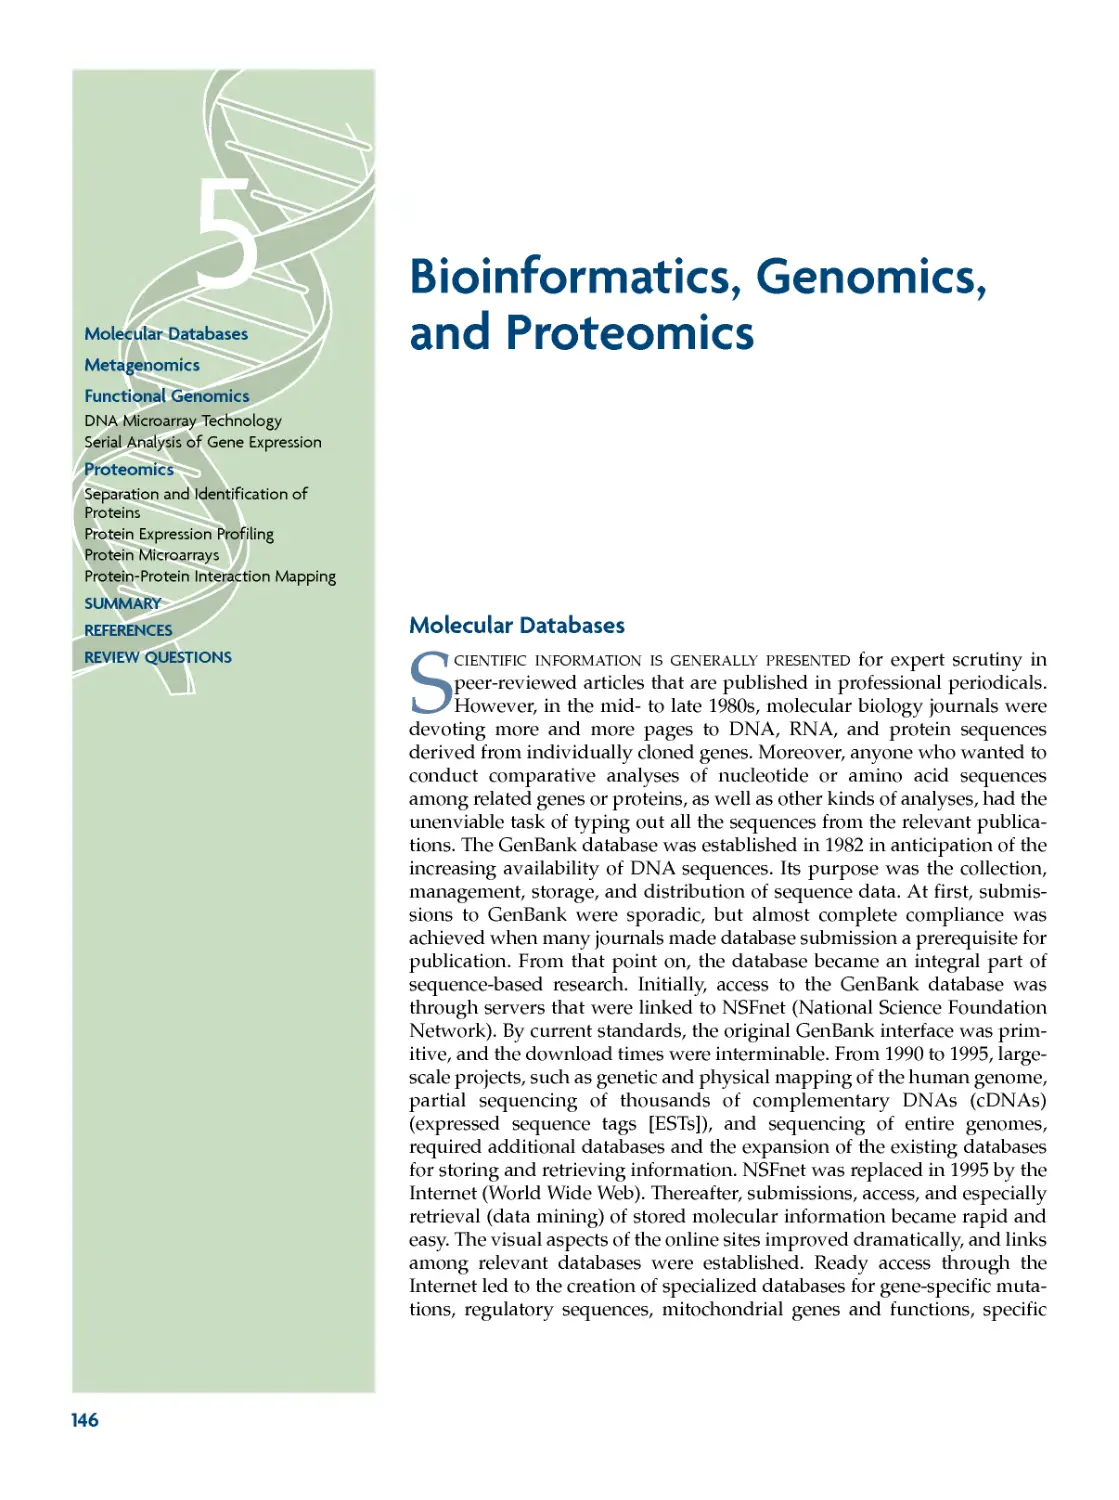 Chapter 5 Bioinformatics, Genomics, and Proteomics